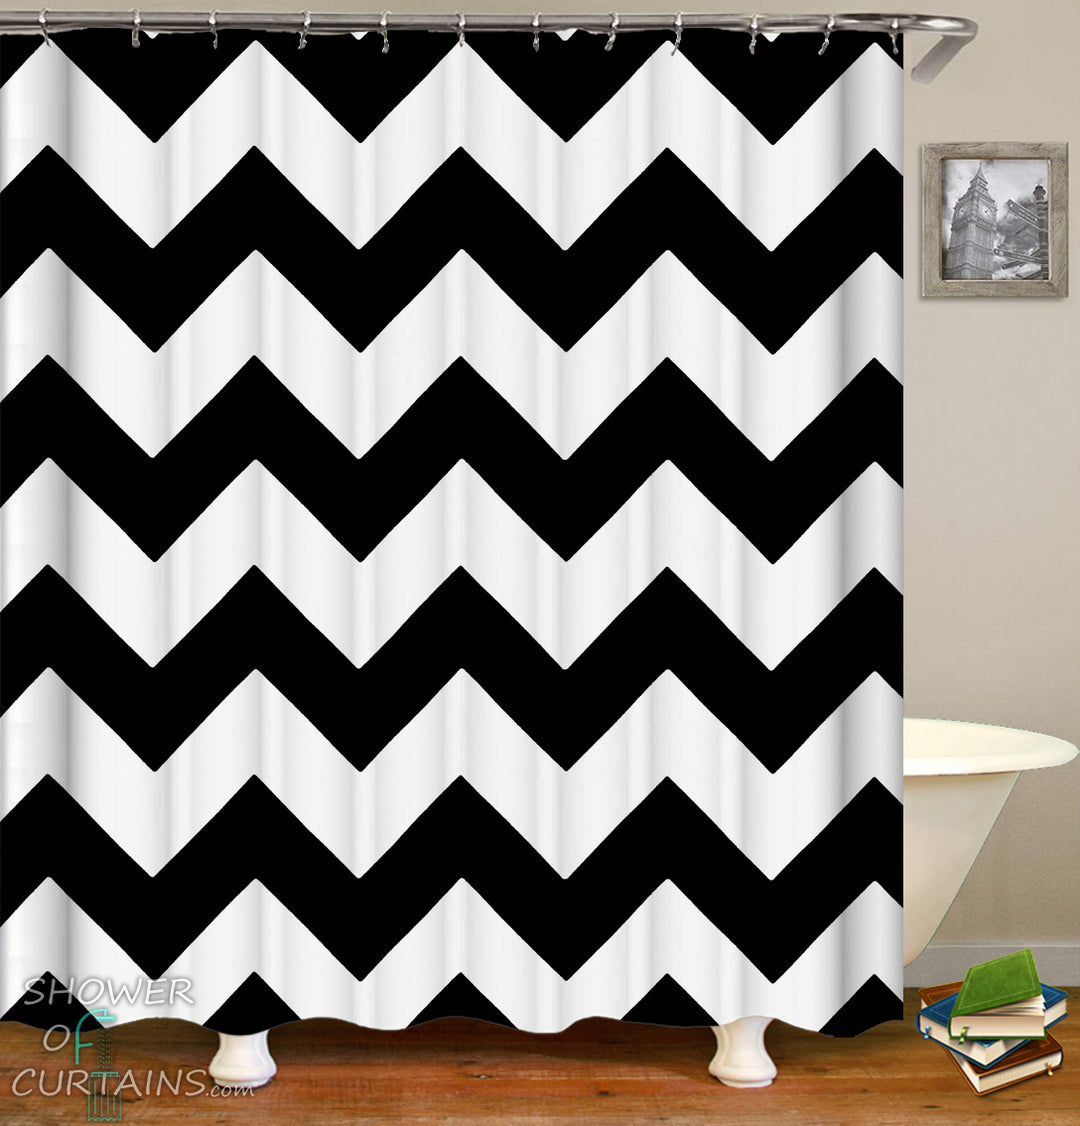 Black and White Chevron Shower Curtain